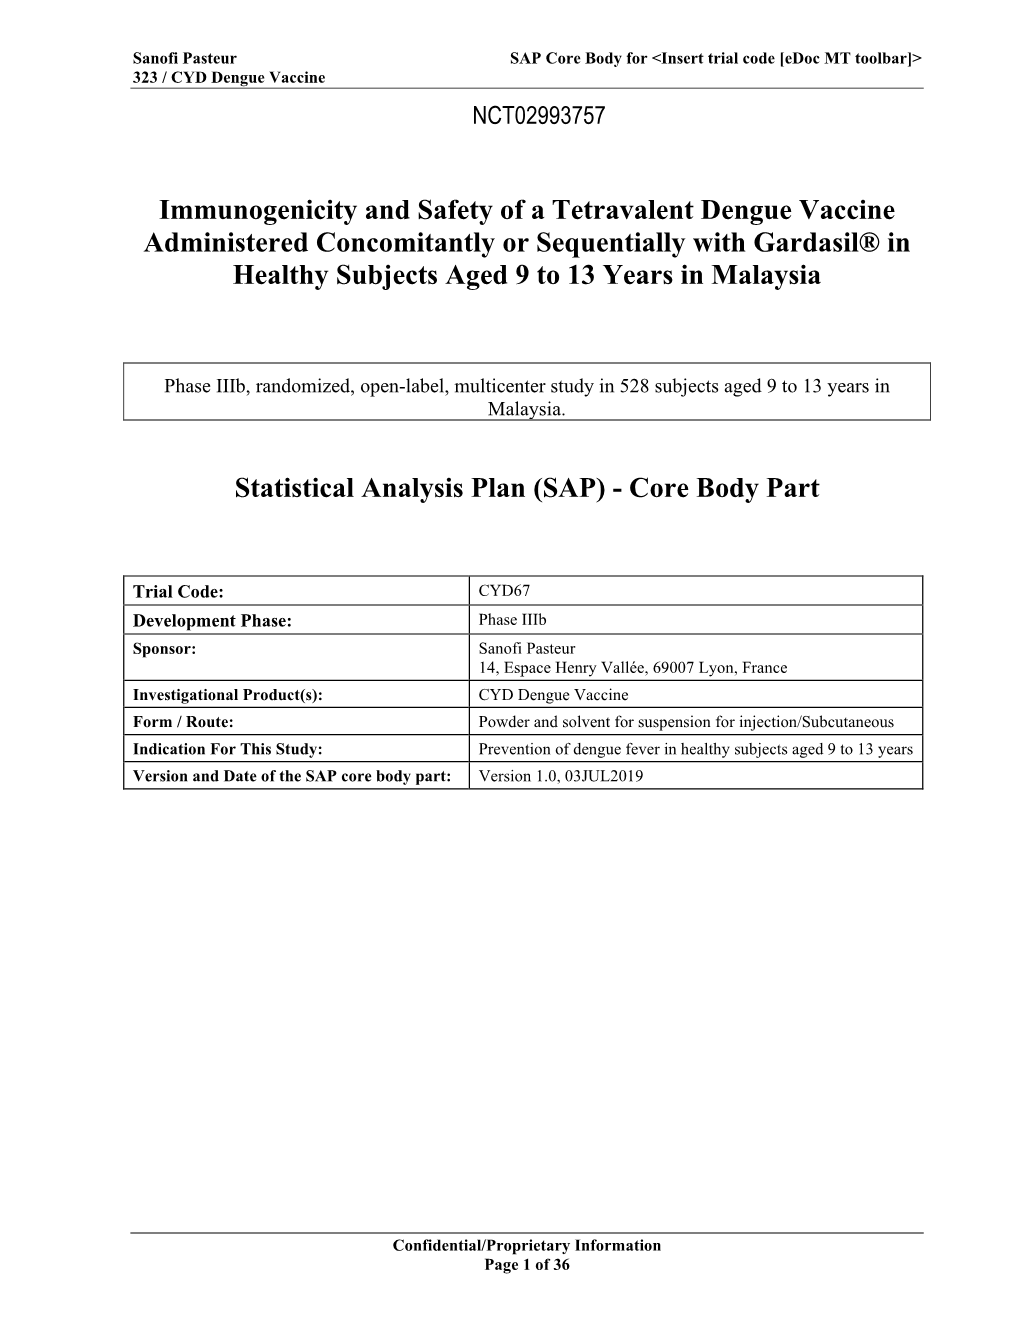 Statistical Analysis Plan (SAP) - Core Body Part